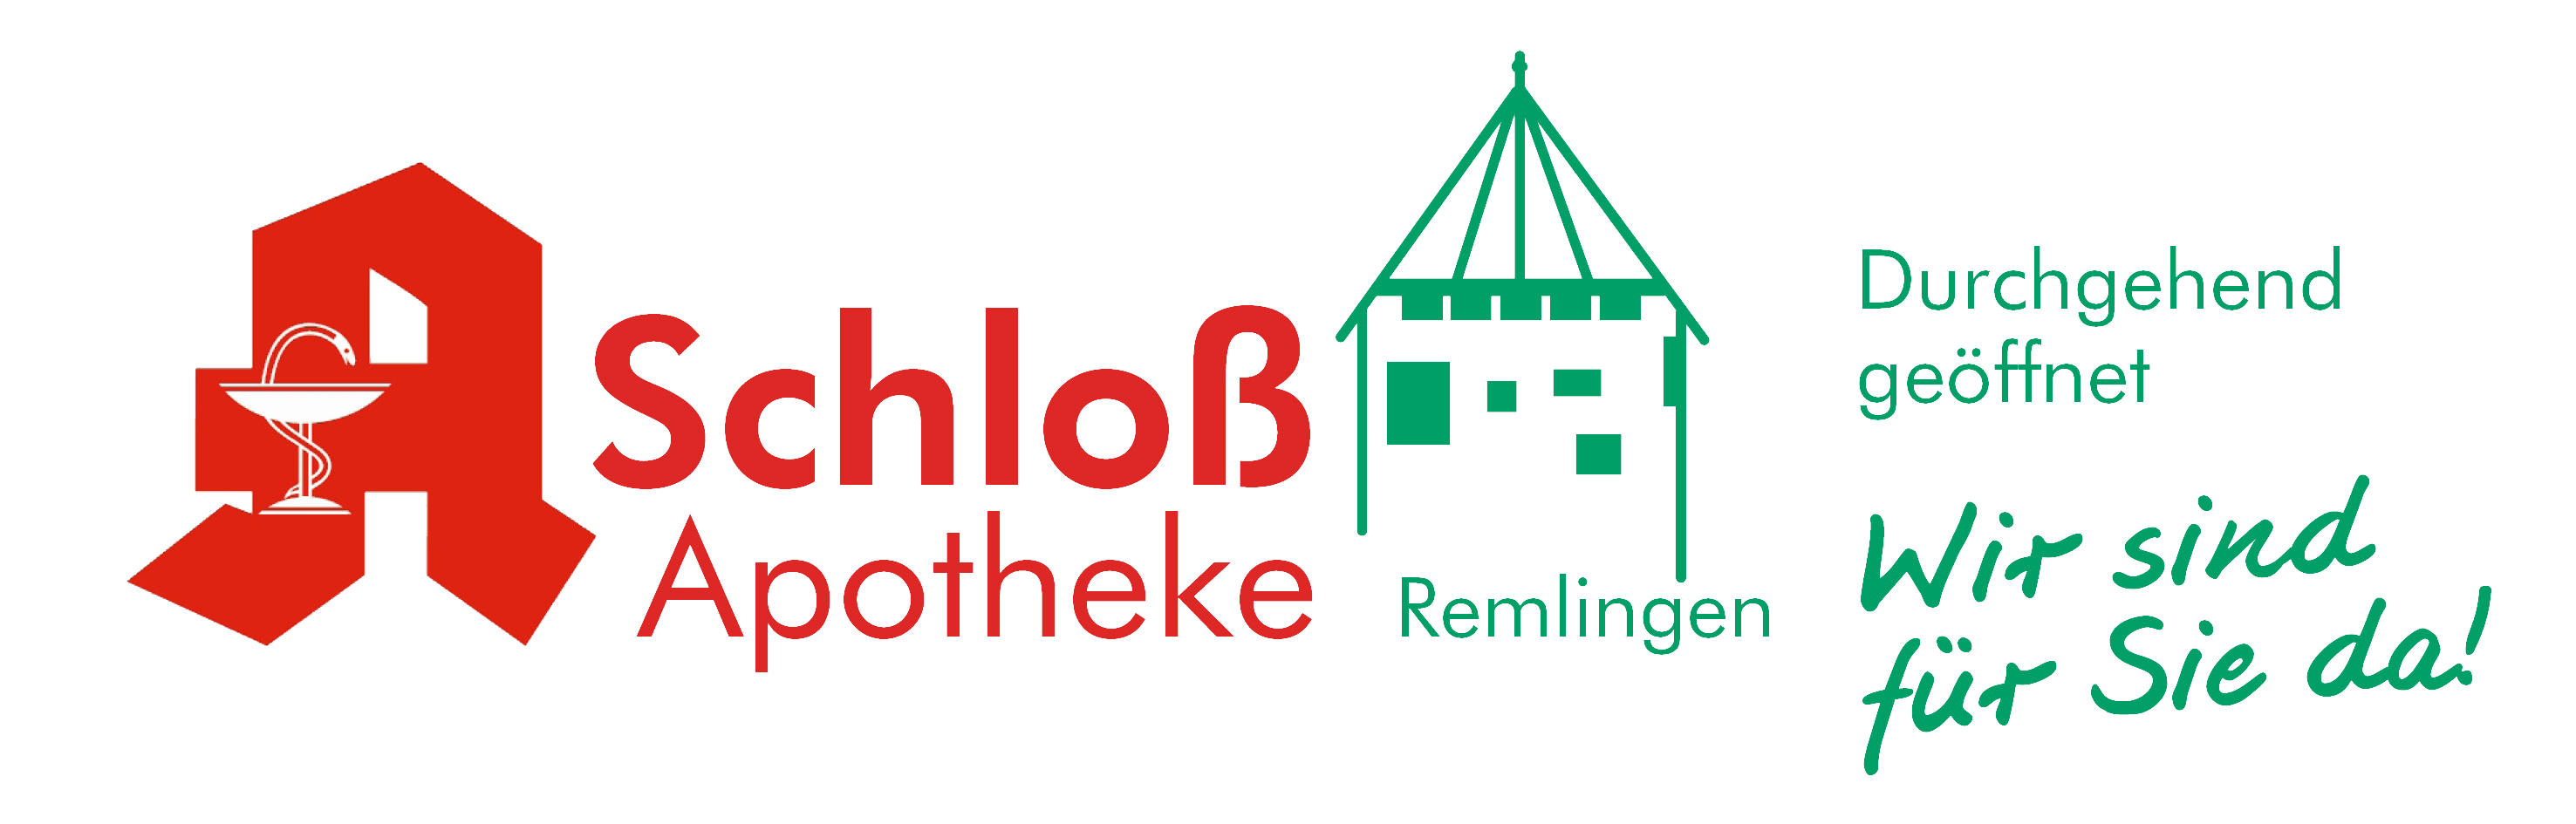 schlossapotheke-remlingen-logo